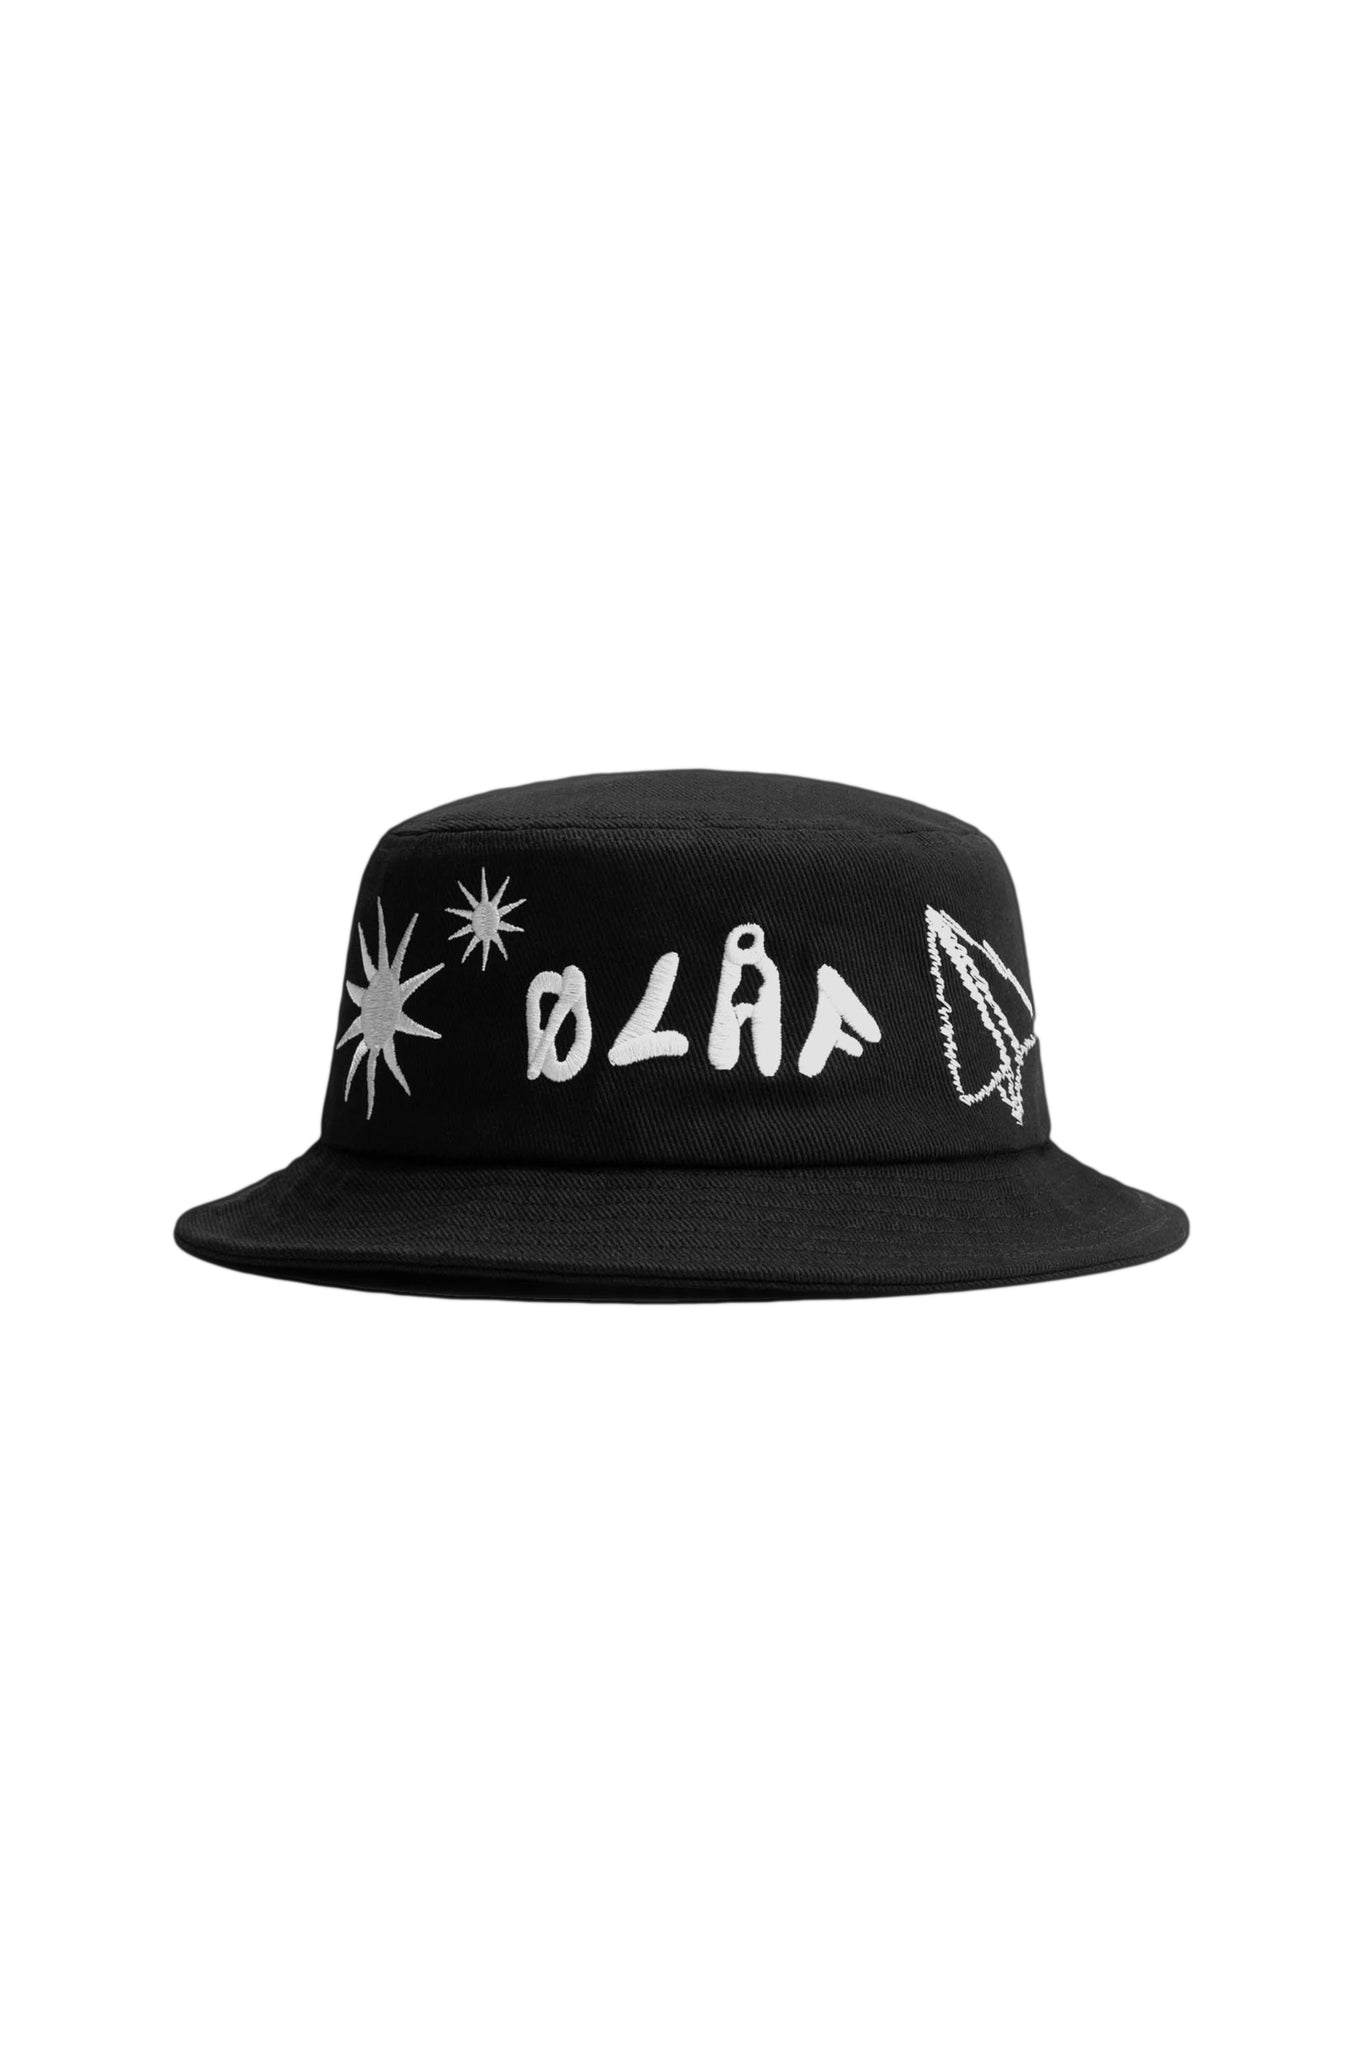 Olaf Friends Bucket Hat, black